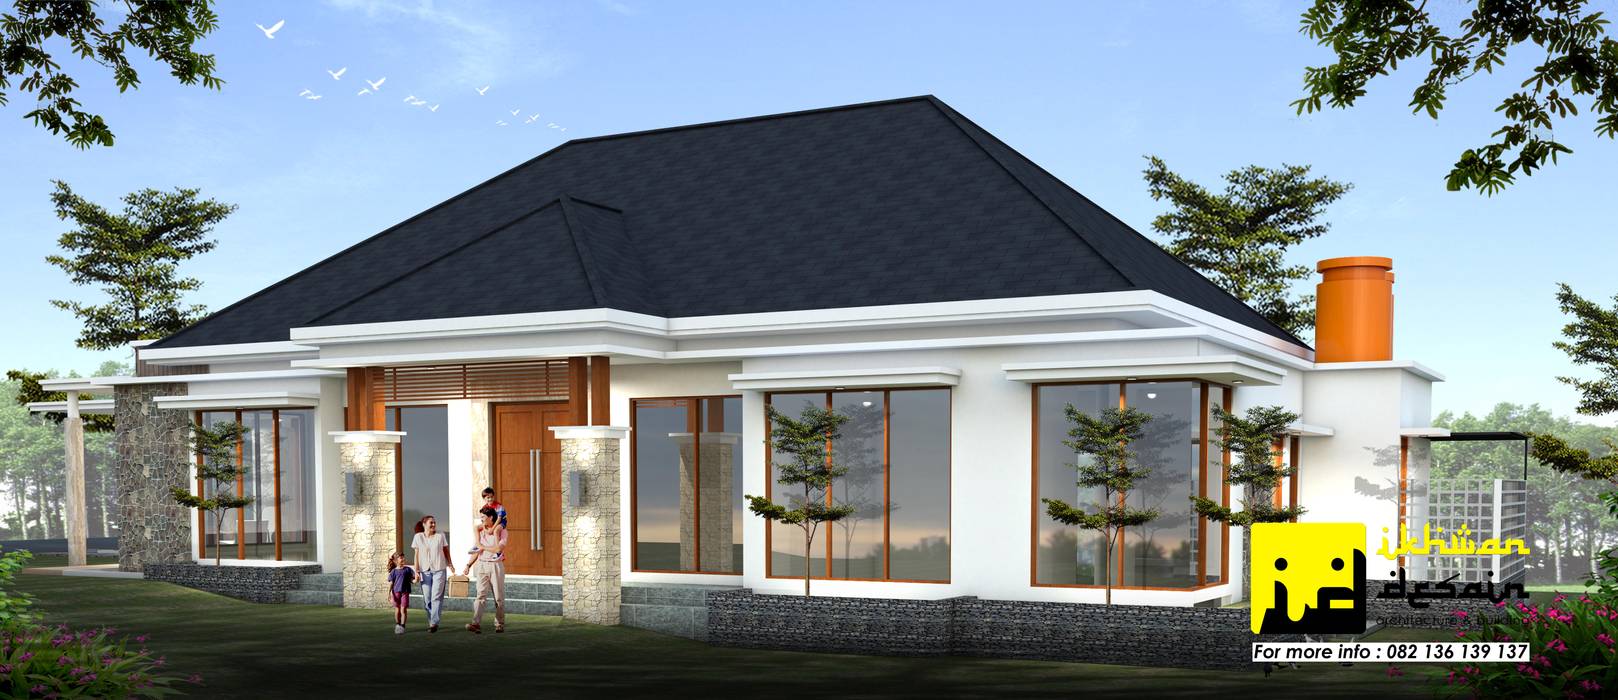 Rumah Modern Tropis, Ikhwan desain Ikhwan desain Single family home Bricks